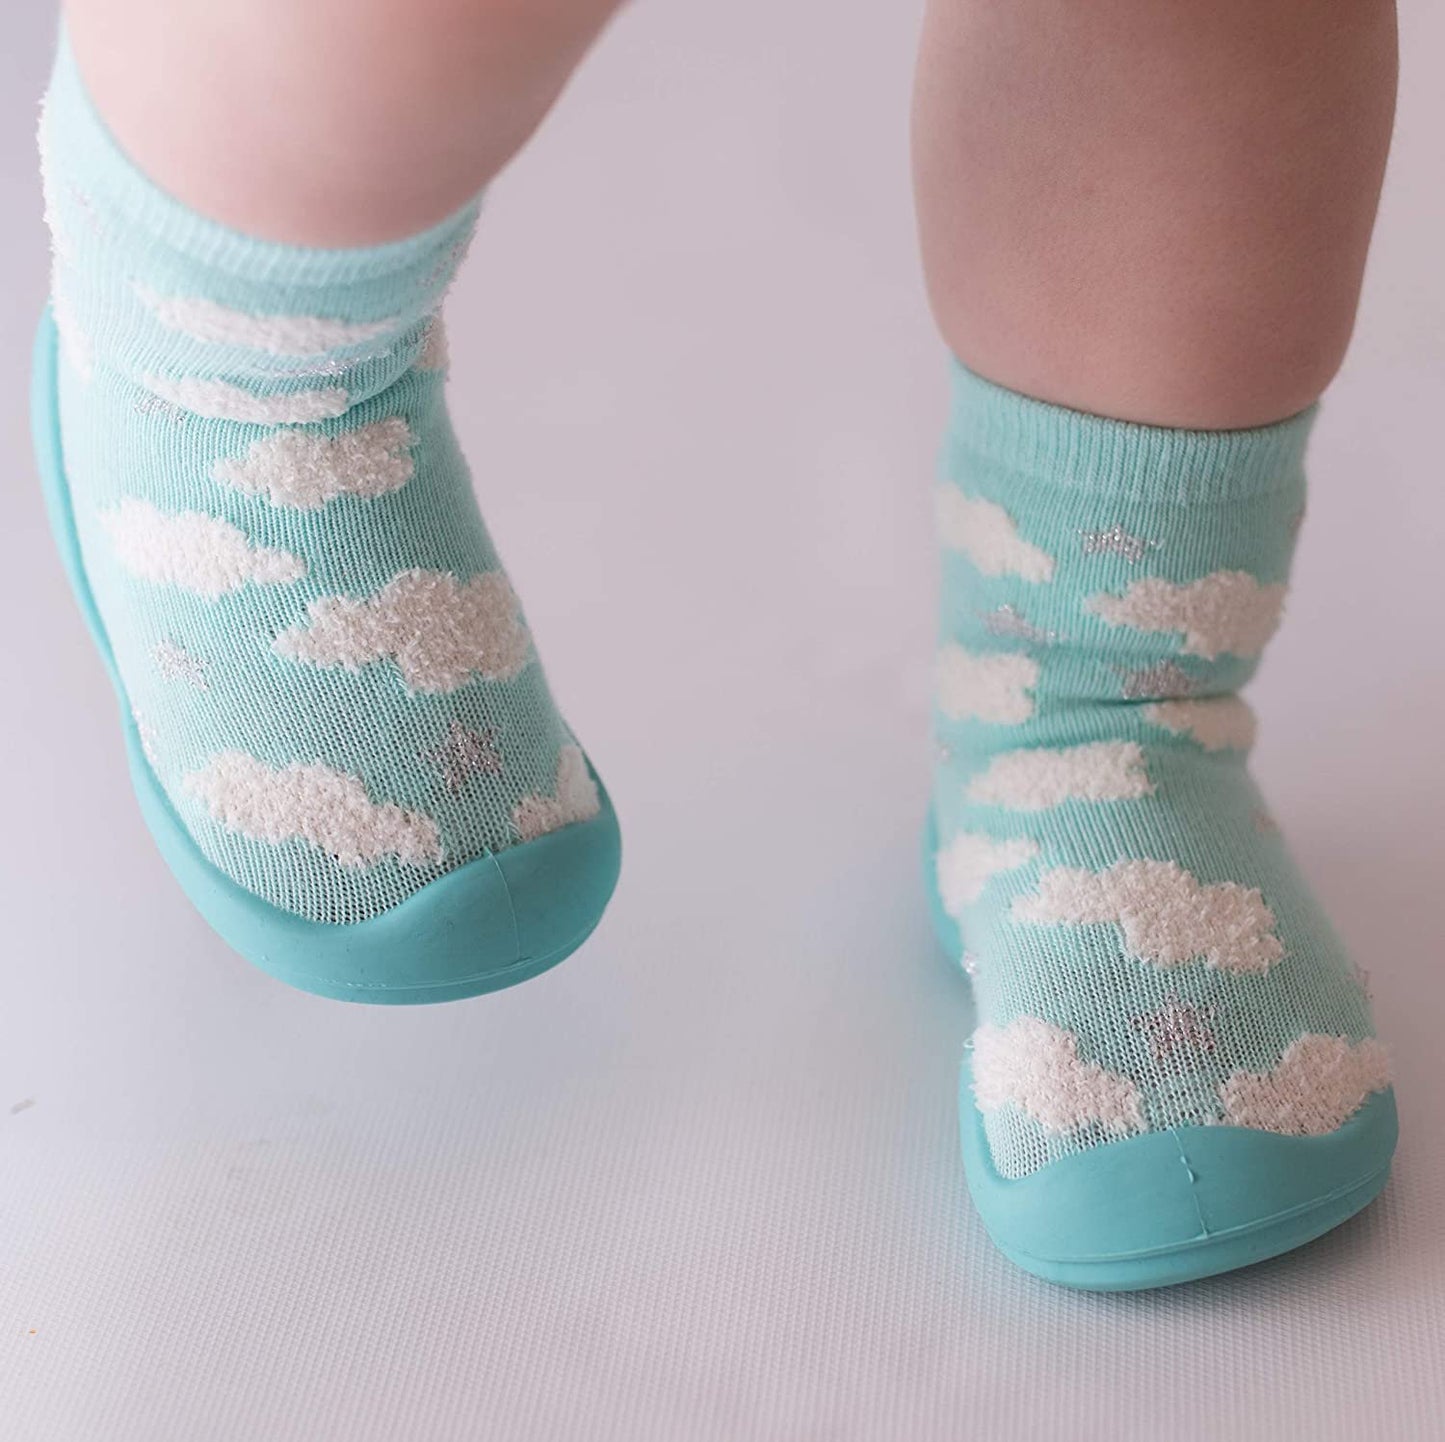 Nuby Snekz Comfortable Rubber Sole Sock Shoes for First Steps- Aqua Clouds/Medium 14-22 Months